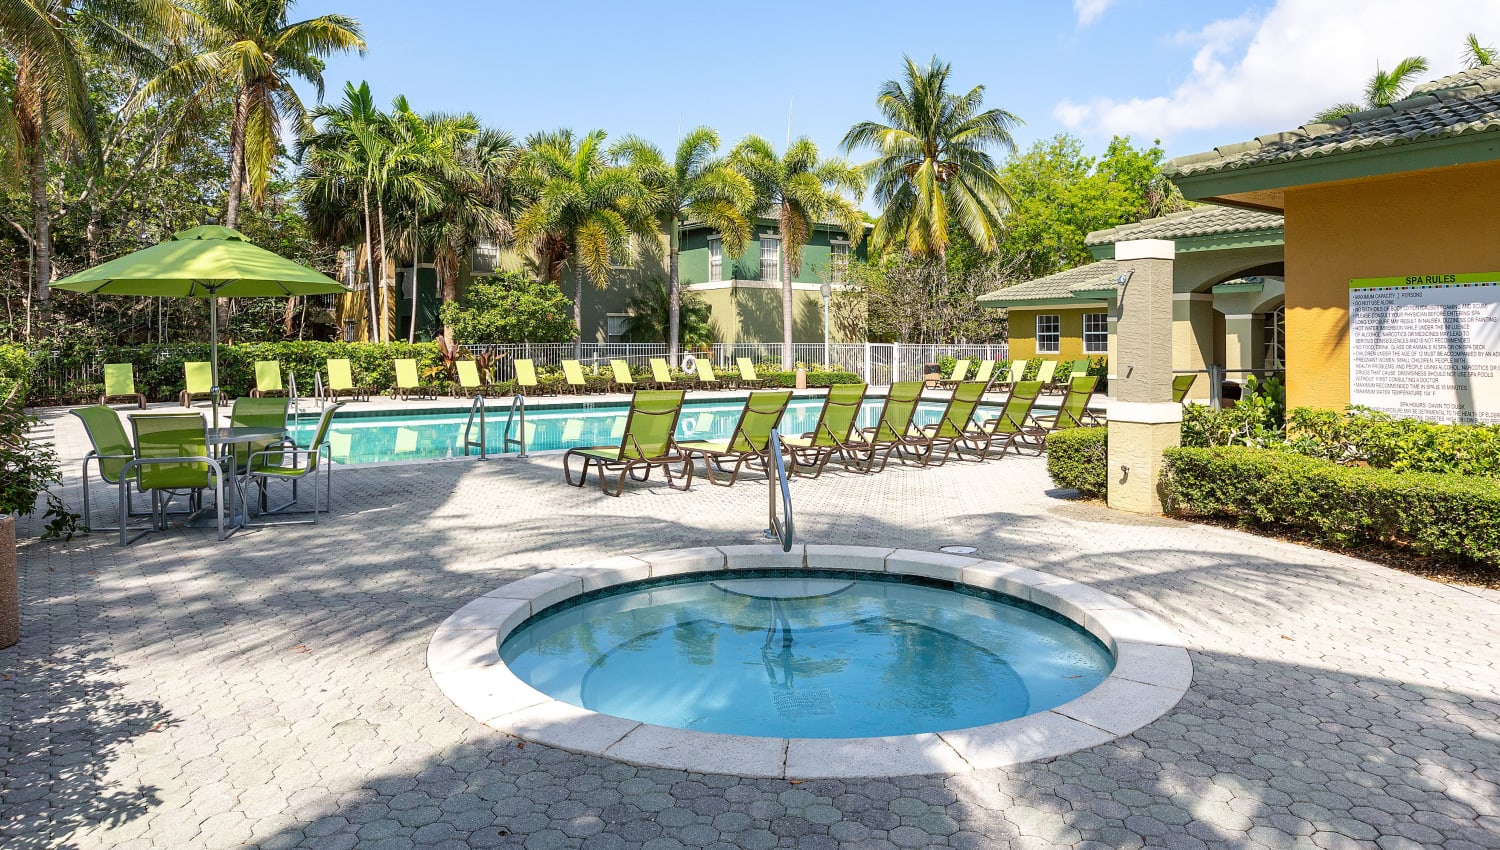 Second spa by the pool at Quantum Lake Villas Apartments in Boynton Beach, Florida